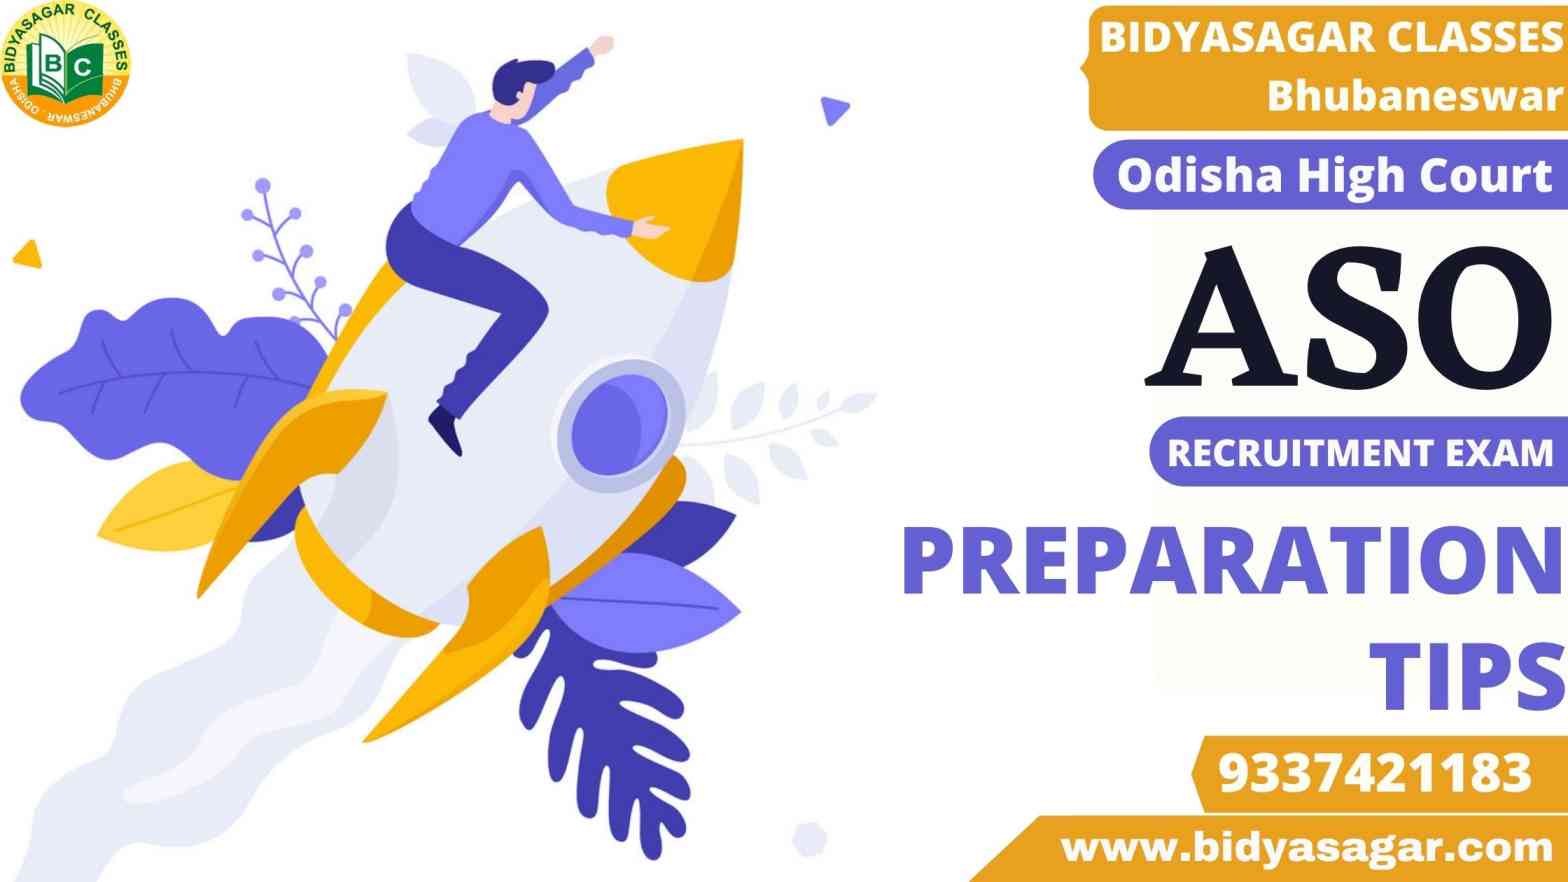 Odisha High Court ASO Recruitment Exam Preparation Tips